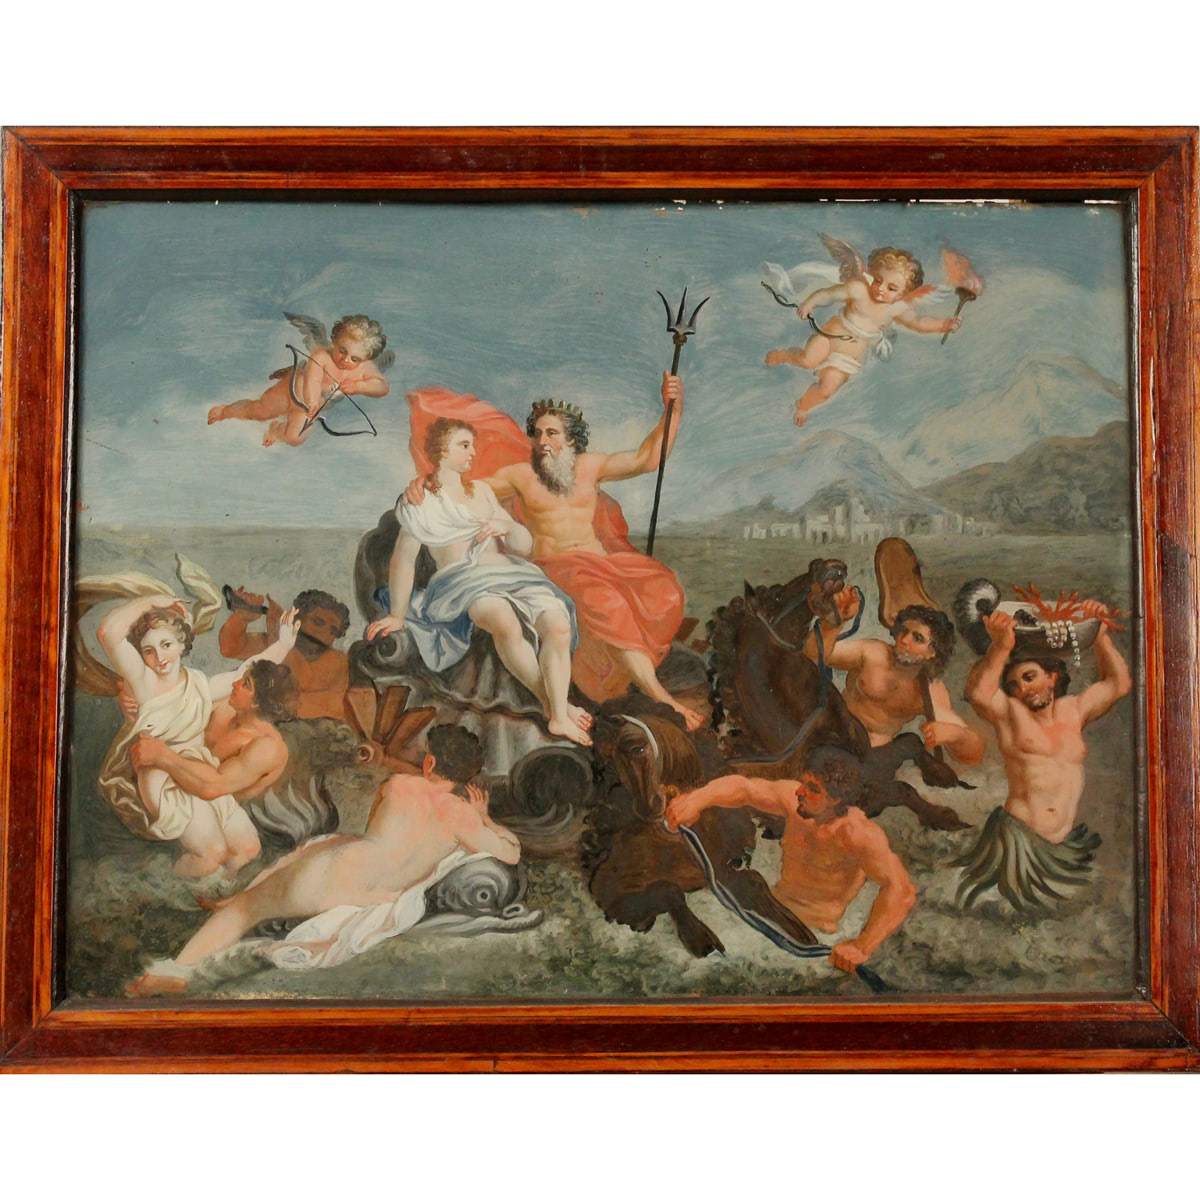 Scuola veneta del secolo XVIII "Scena mitologica" - Venetian school of the 18th century "Mythological scene"